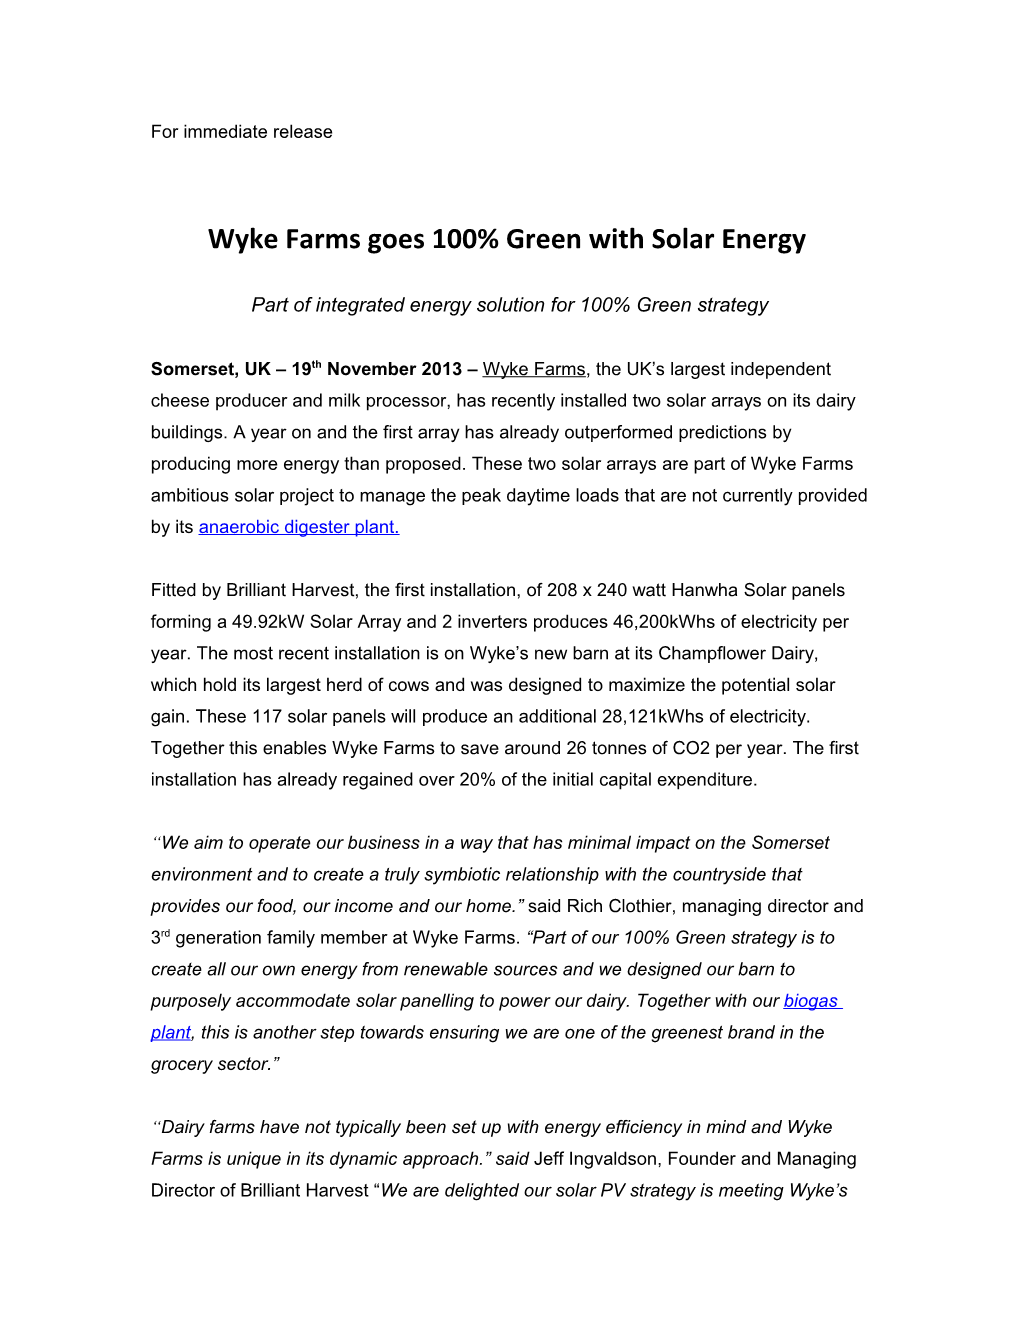 Wyke Farms Goes 100% Green with Solar Energy